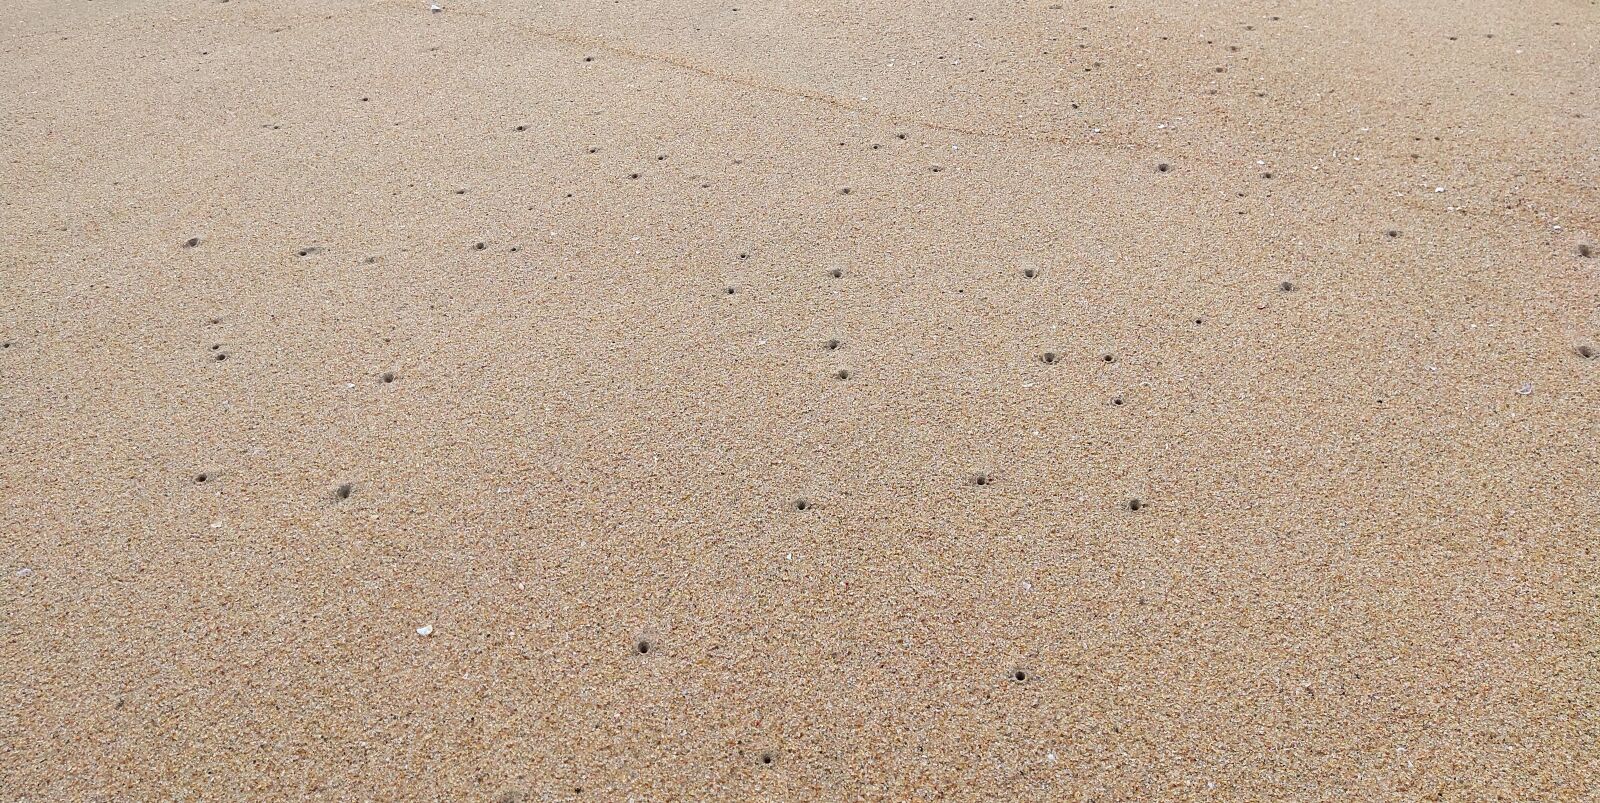 vivo 1818 sample photo. Texture, sand, beach photography